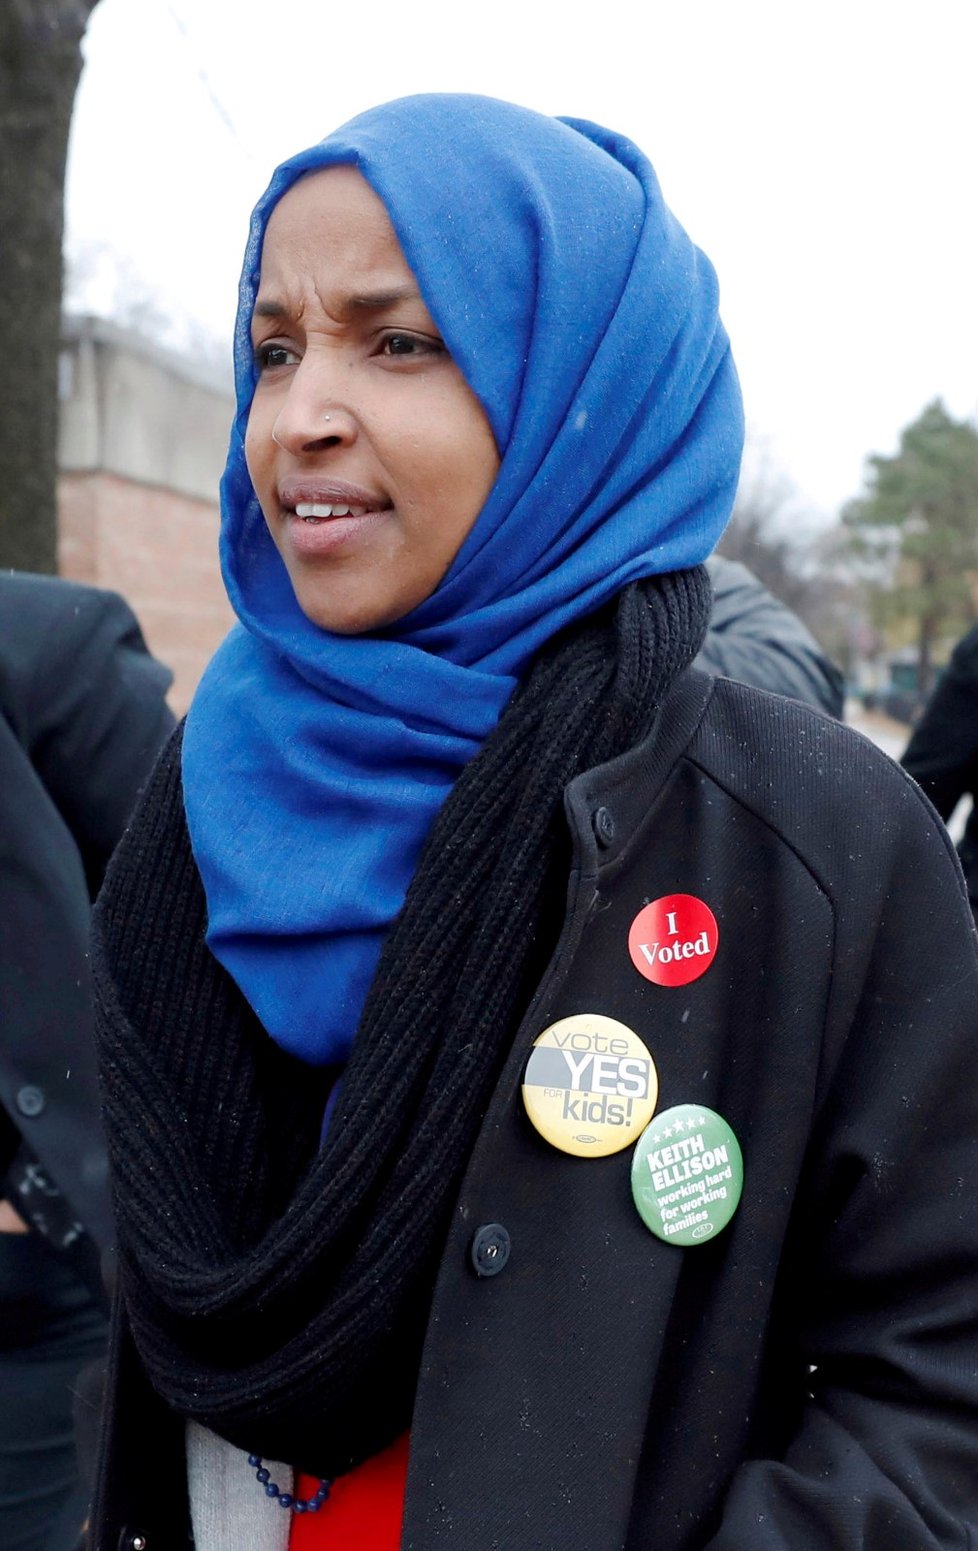 Demokratická kongresmanka Ilhan Omarová.